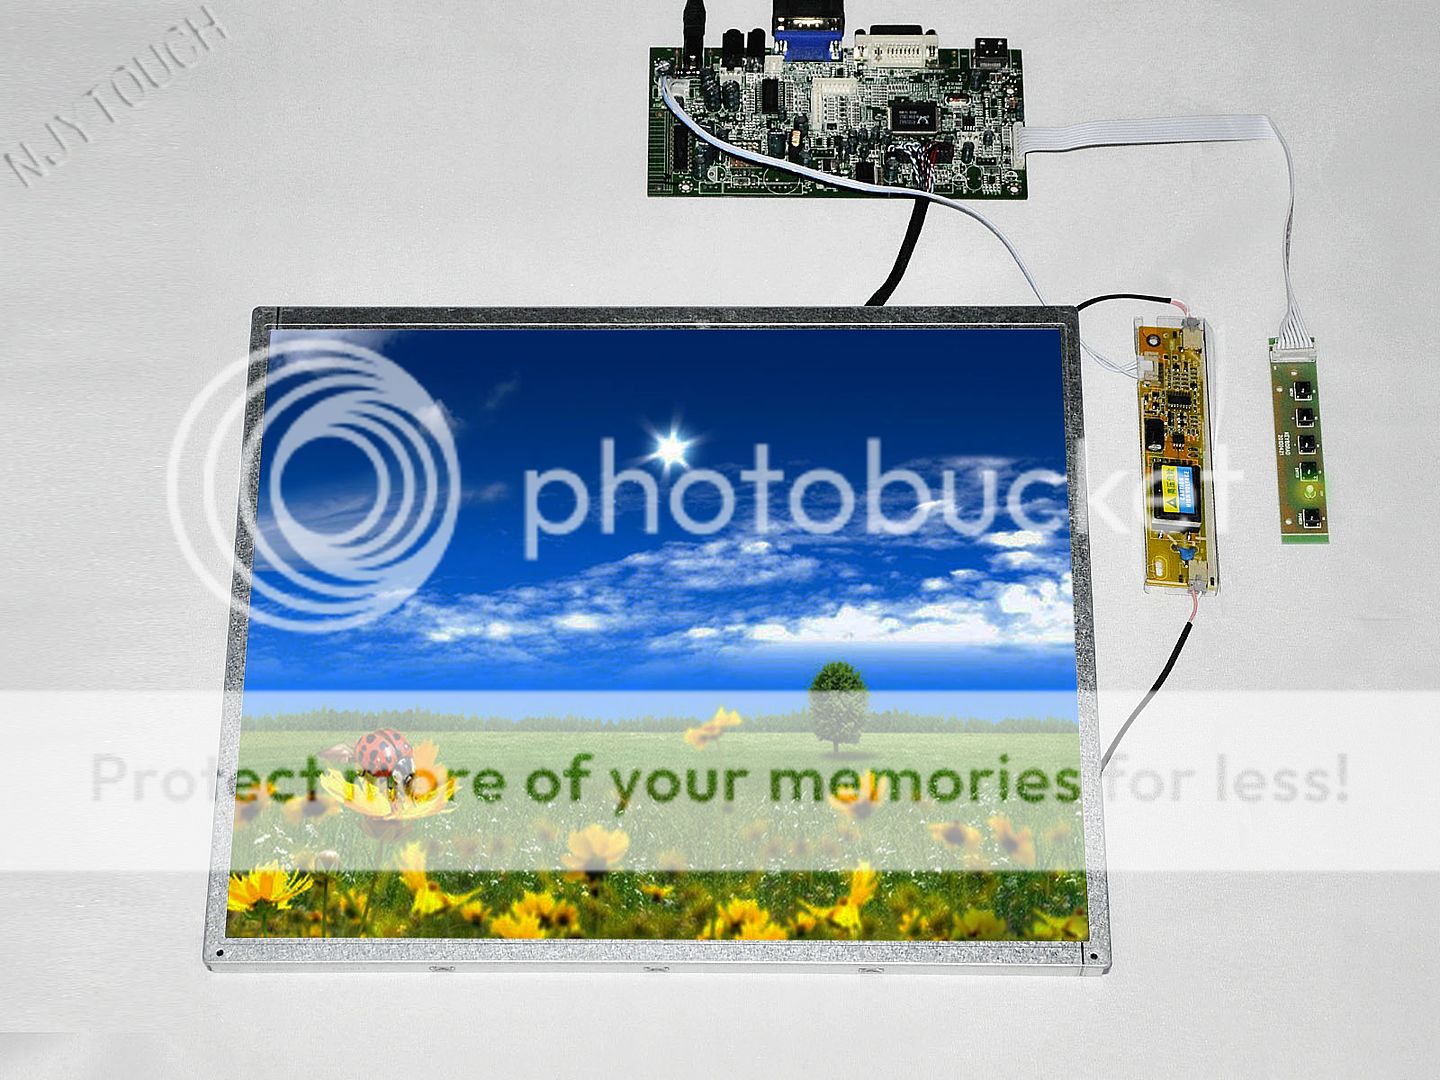 17inch TFT LCD Screen Panel TFT Monitor SXGA 1280x1024 HDMI LCD Controller Board